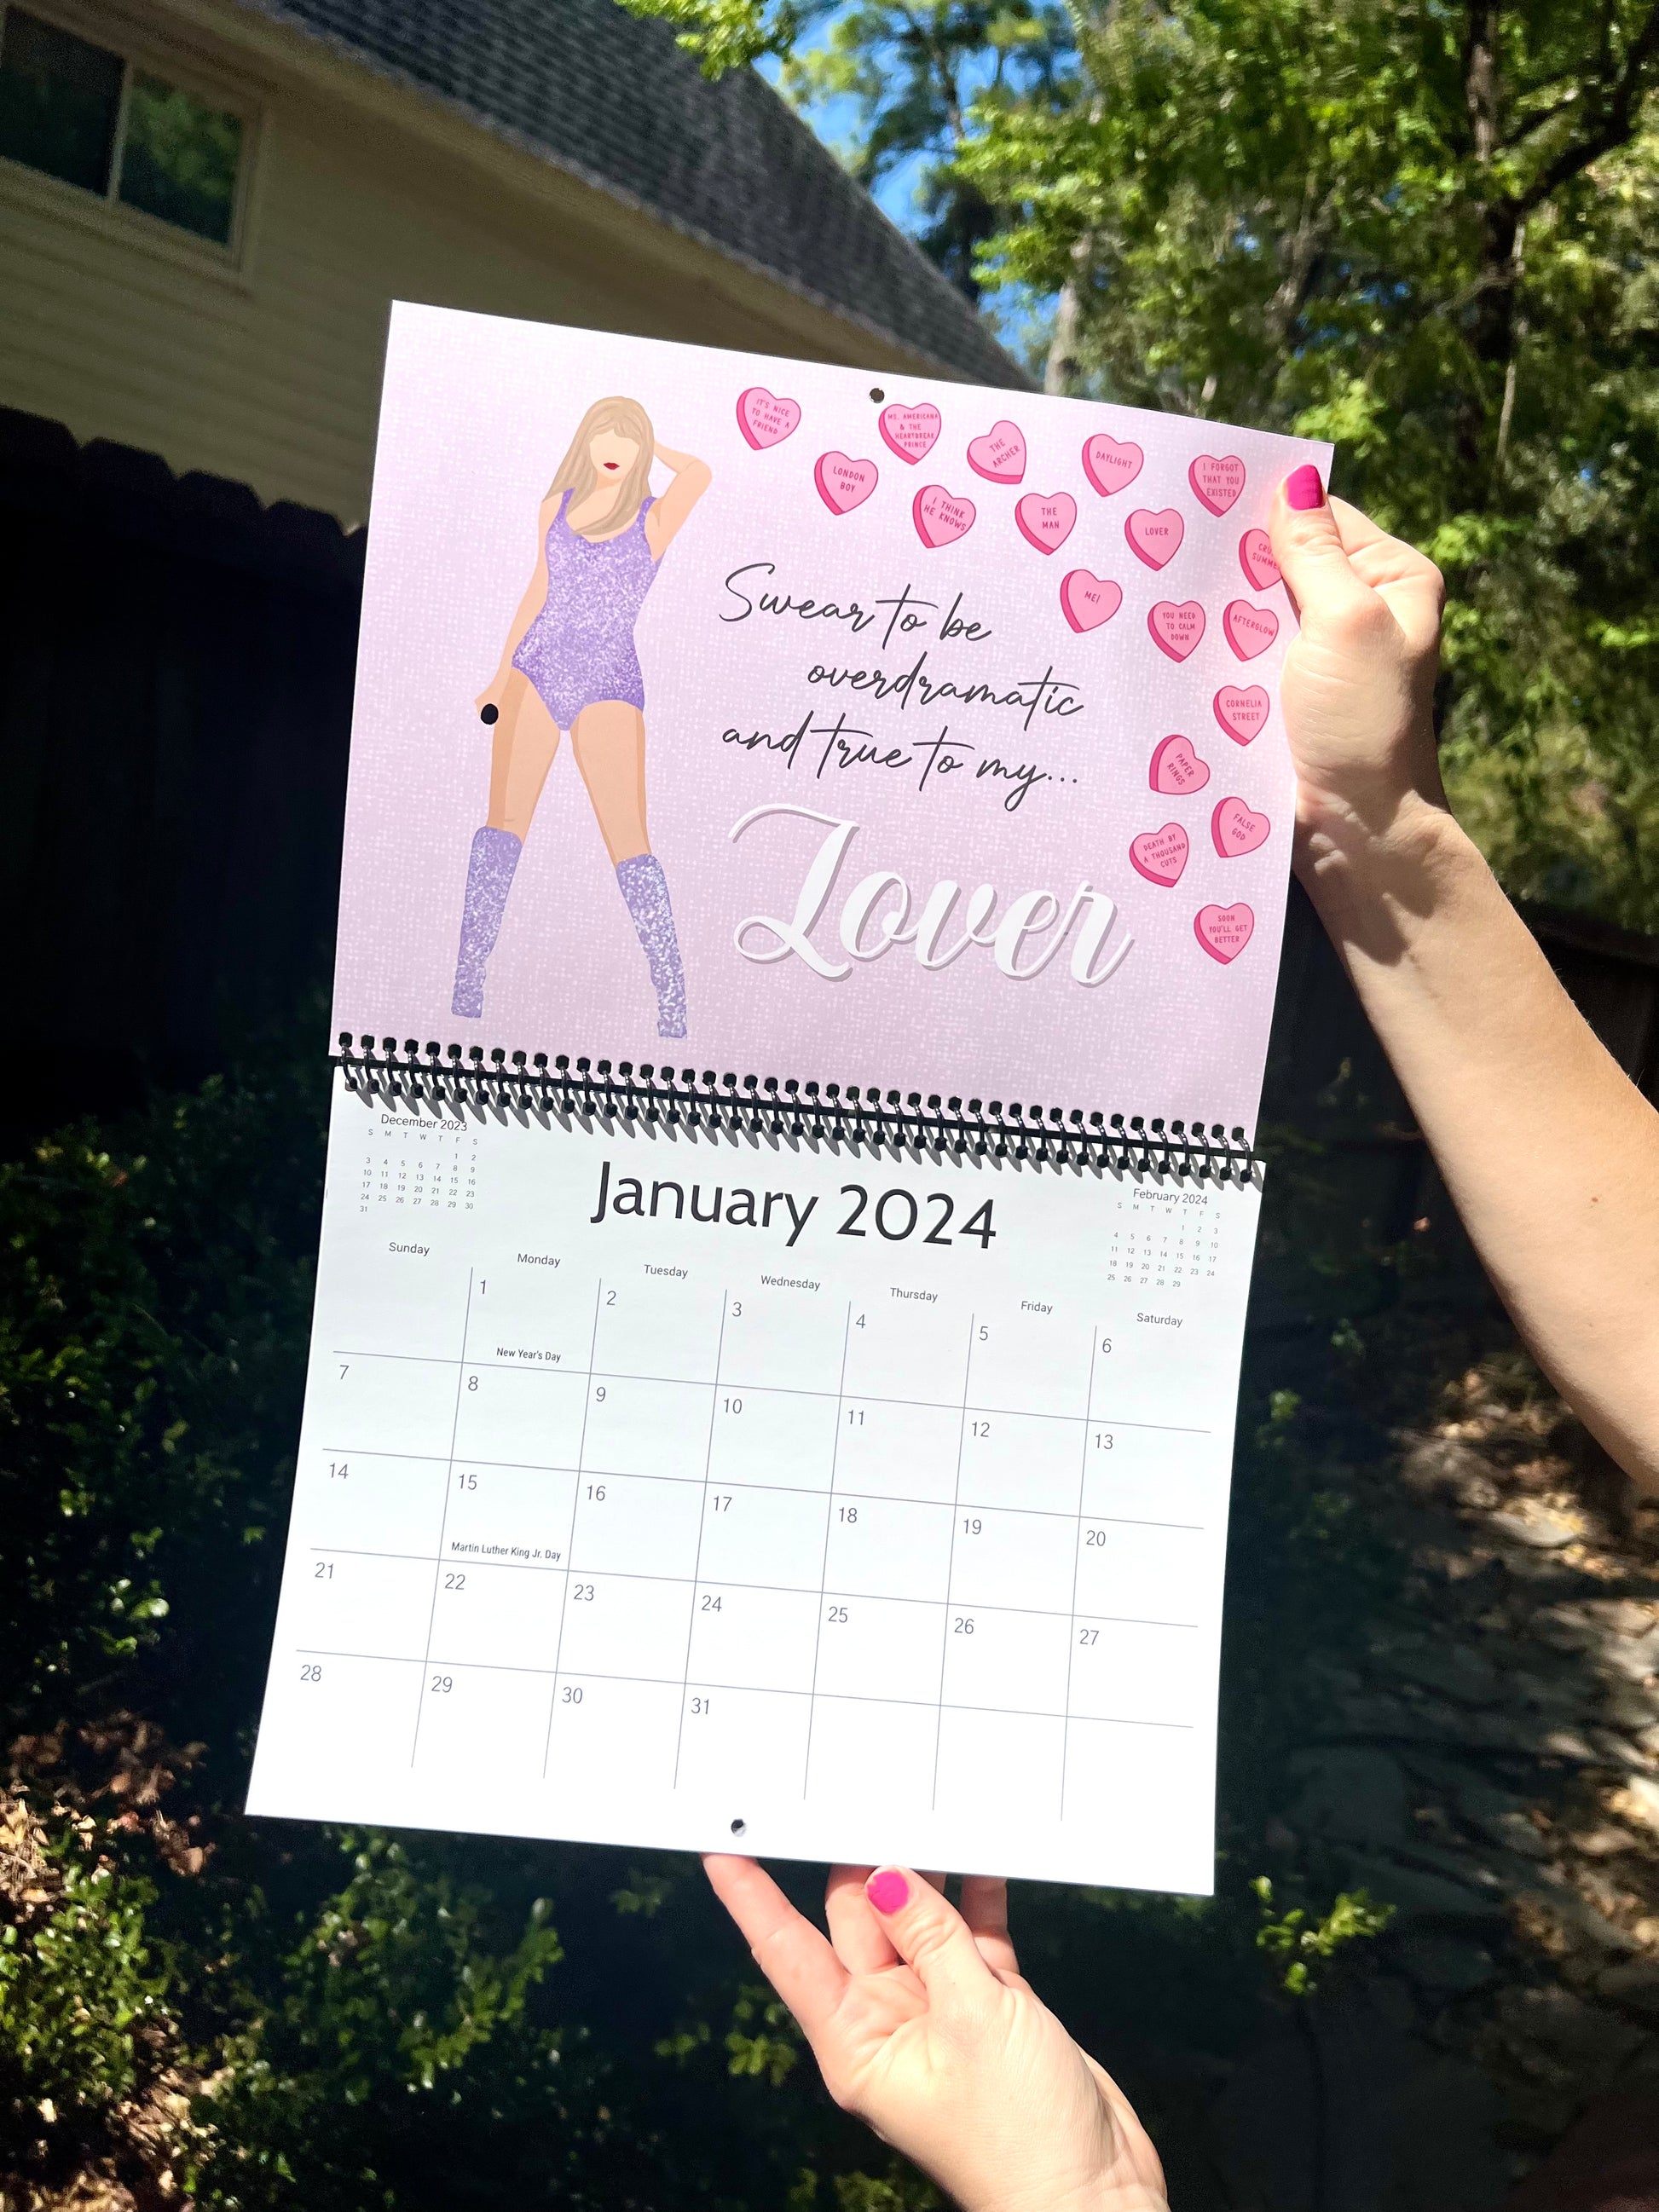 Taylor Swift 2024 Wall Calendar, January 2024, Lover era